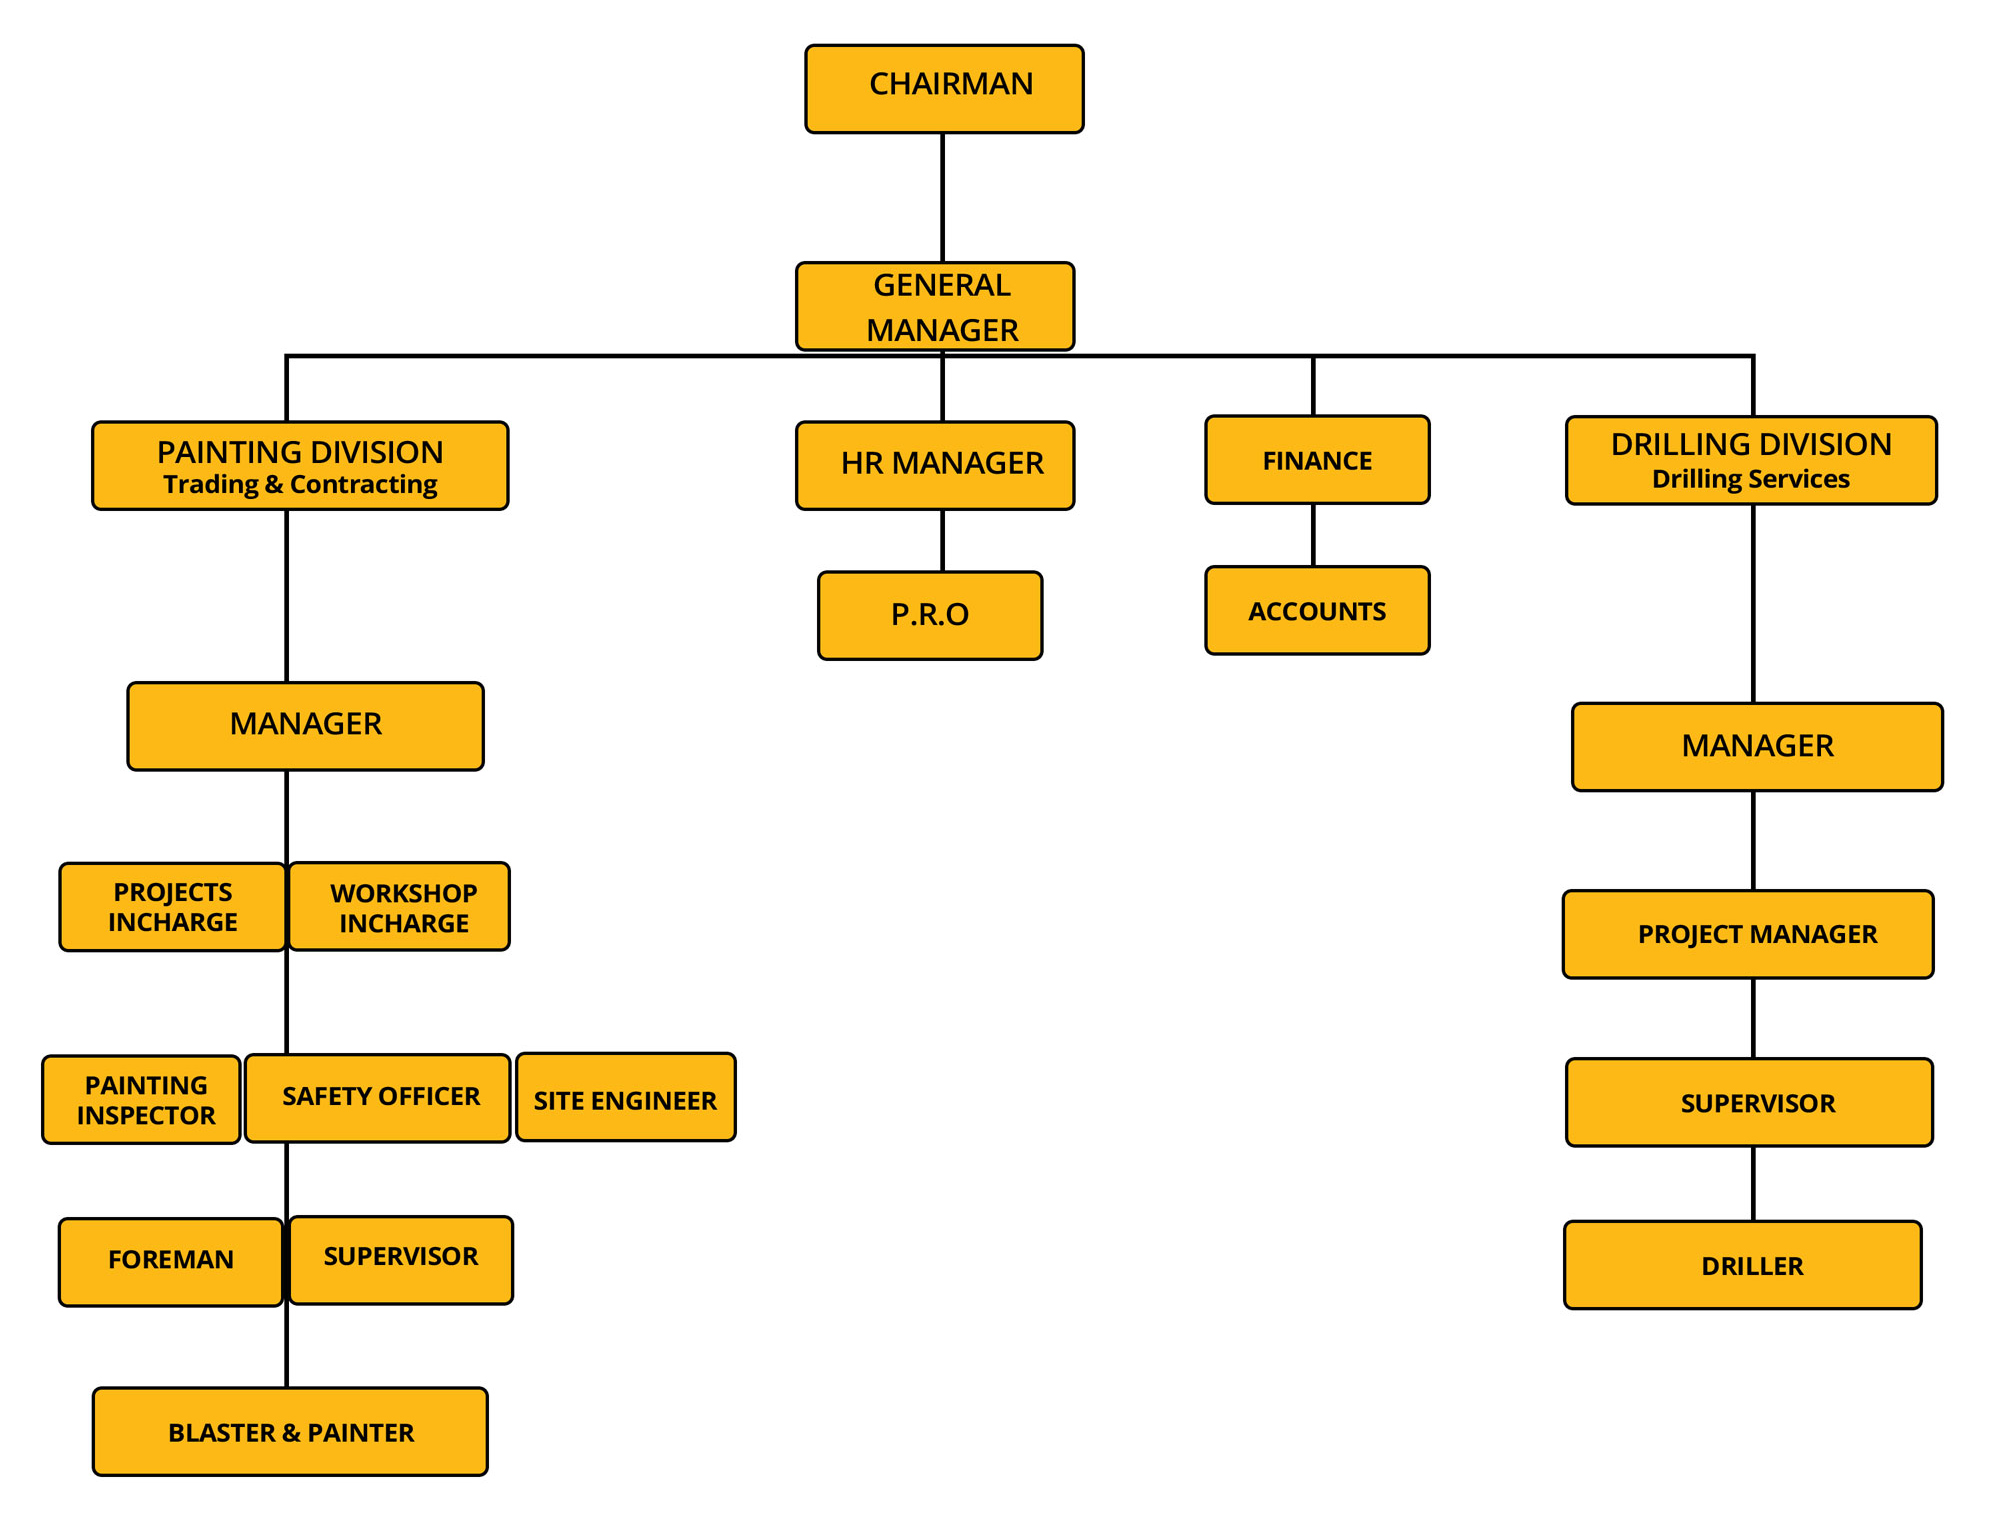 Organisation chart